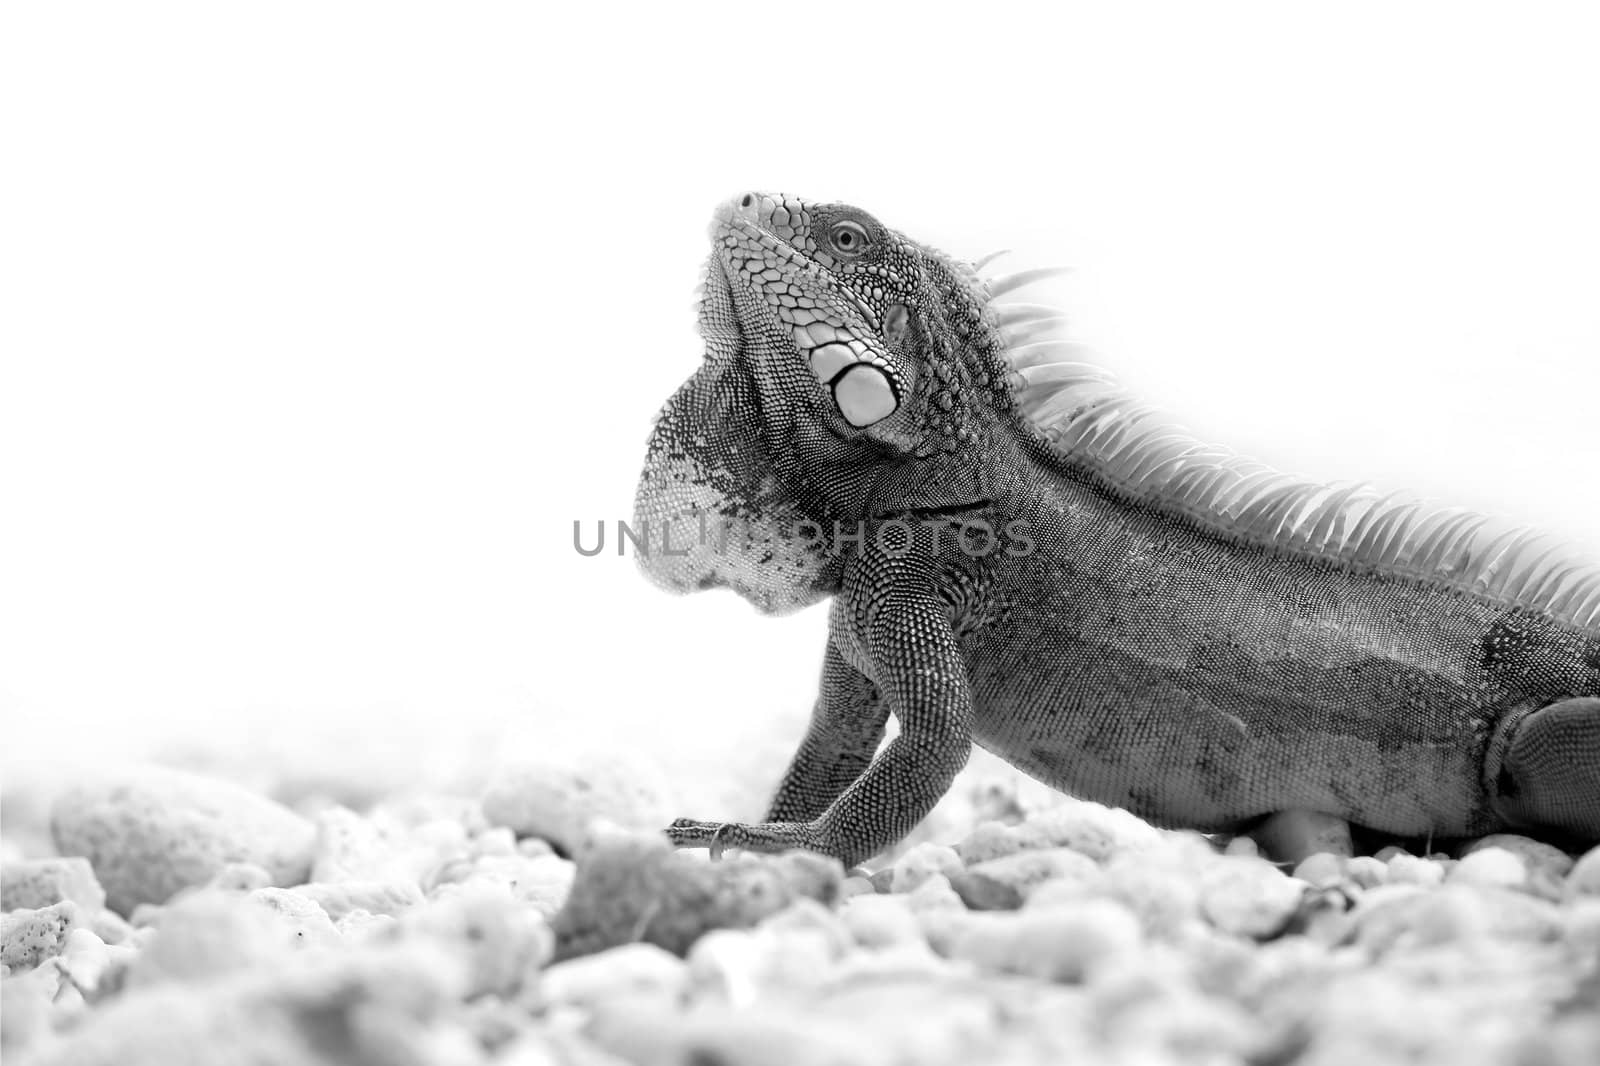 Iguana by kjorgen